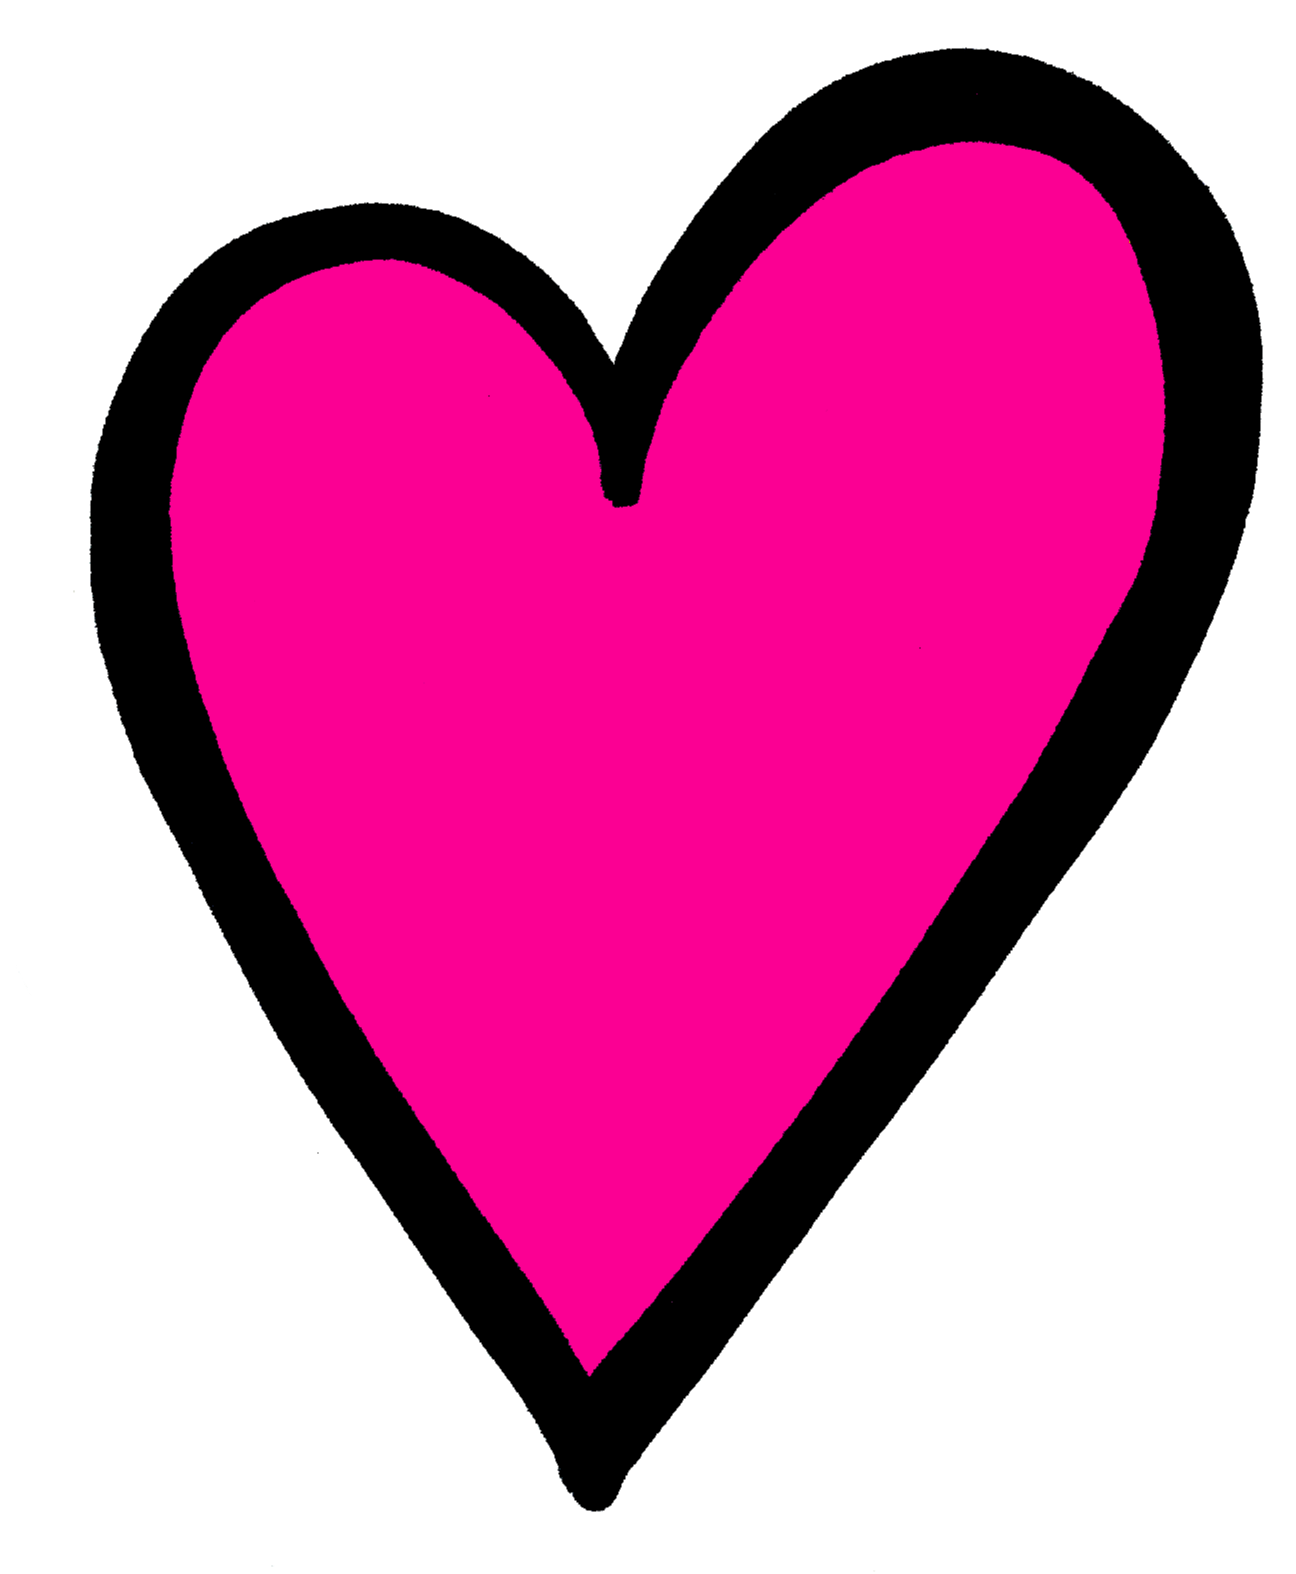 Hot Pink Heart PNG Transparent Image